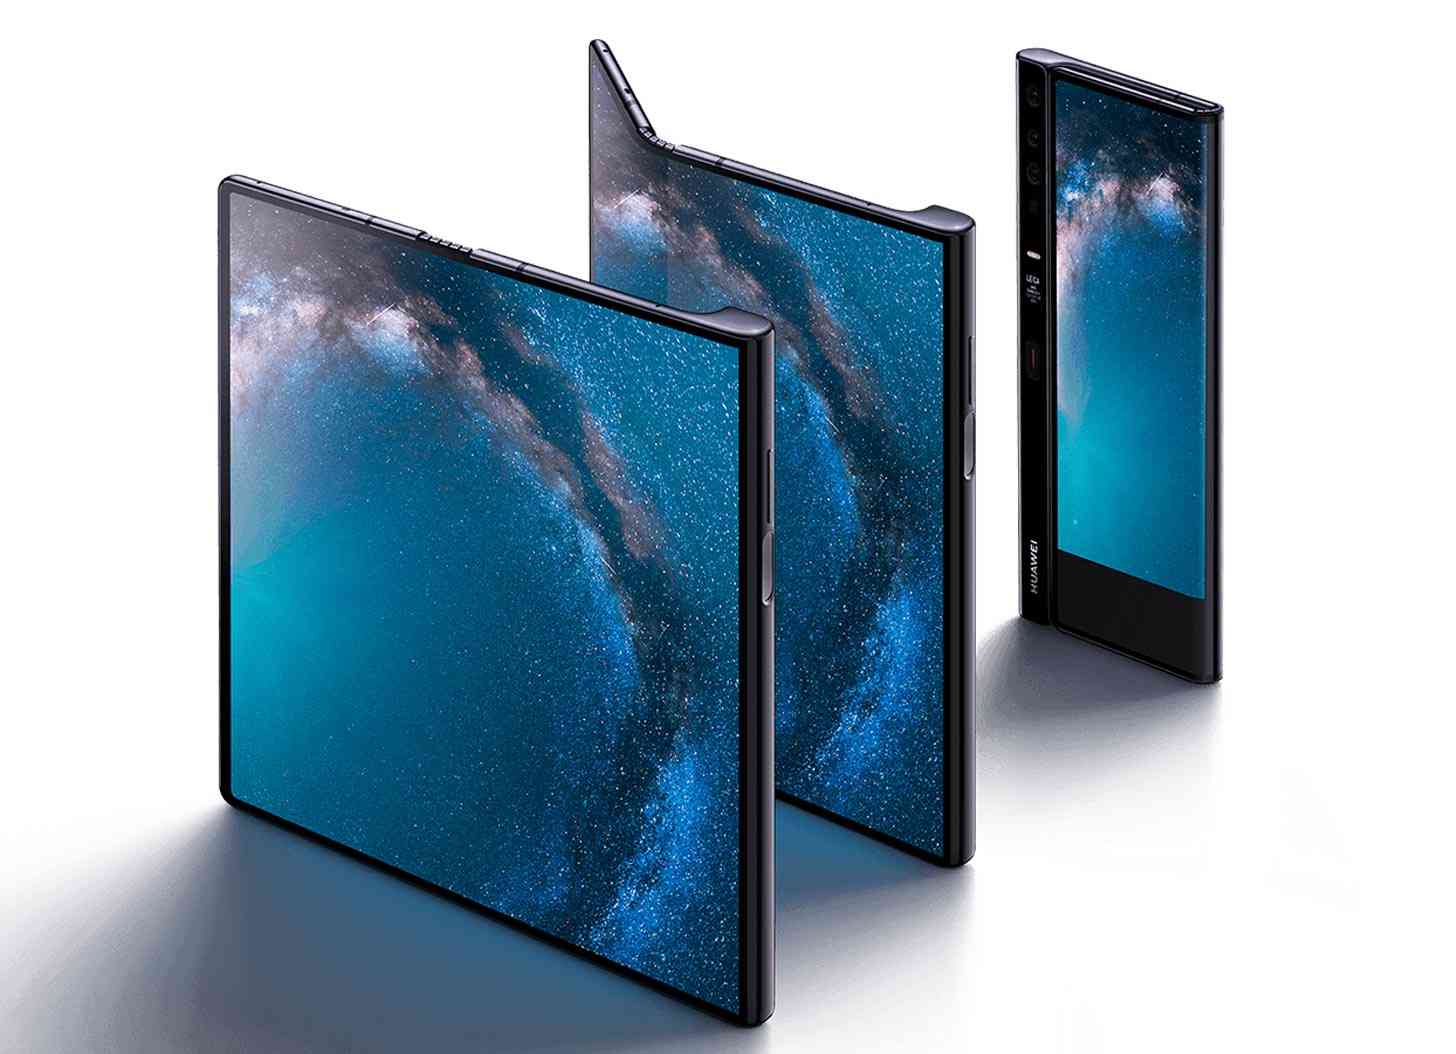 Huawei Mate X foldable